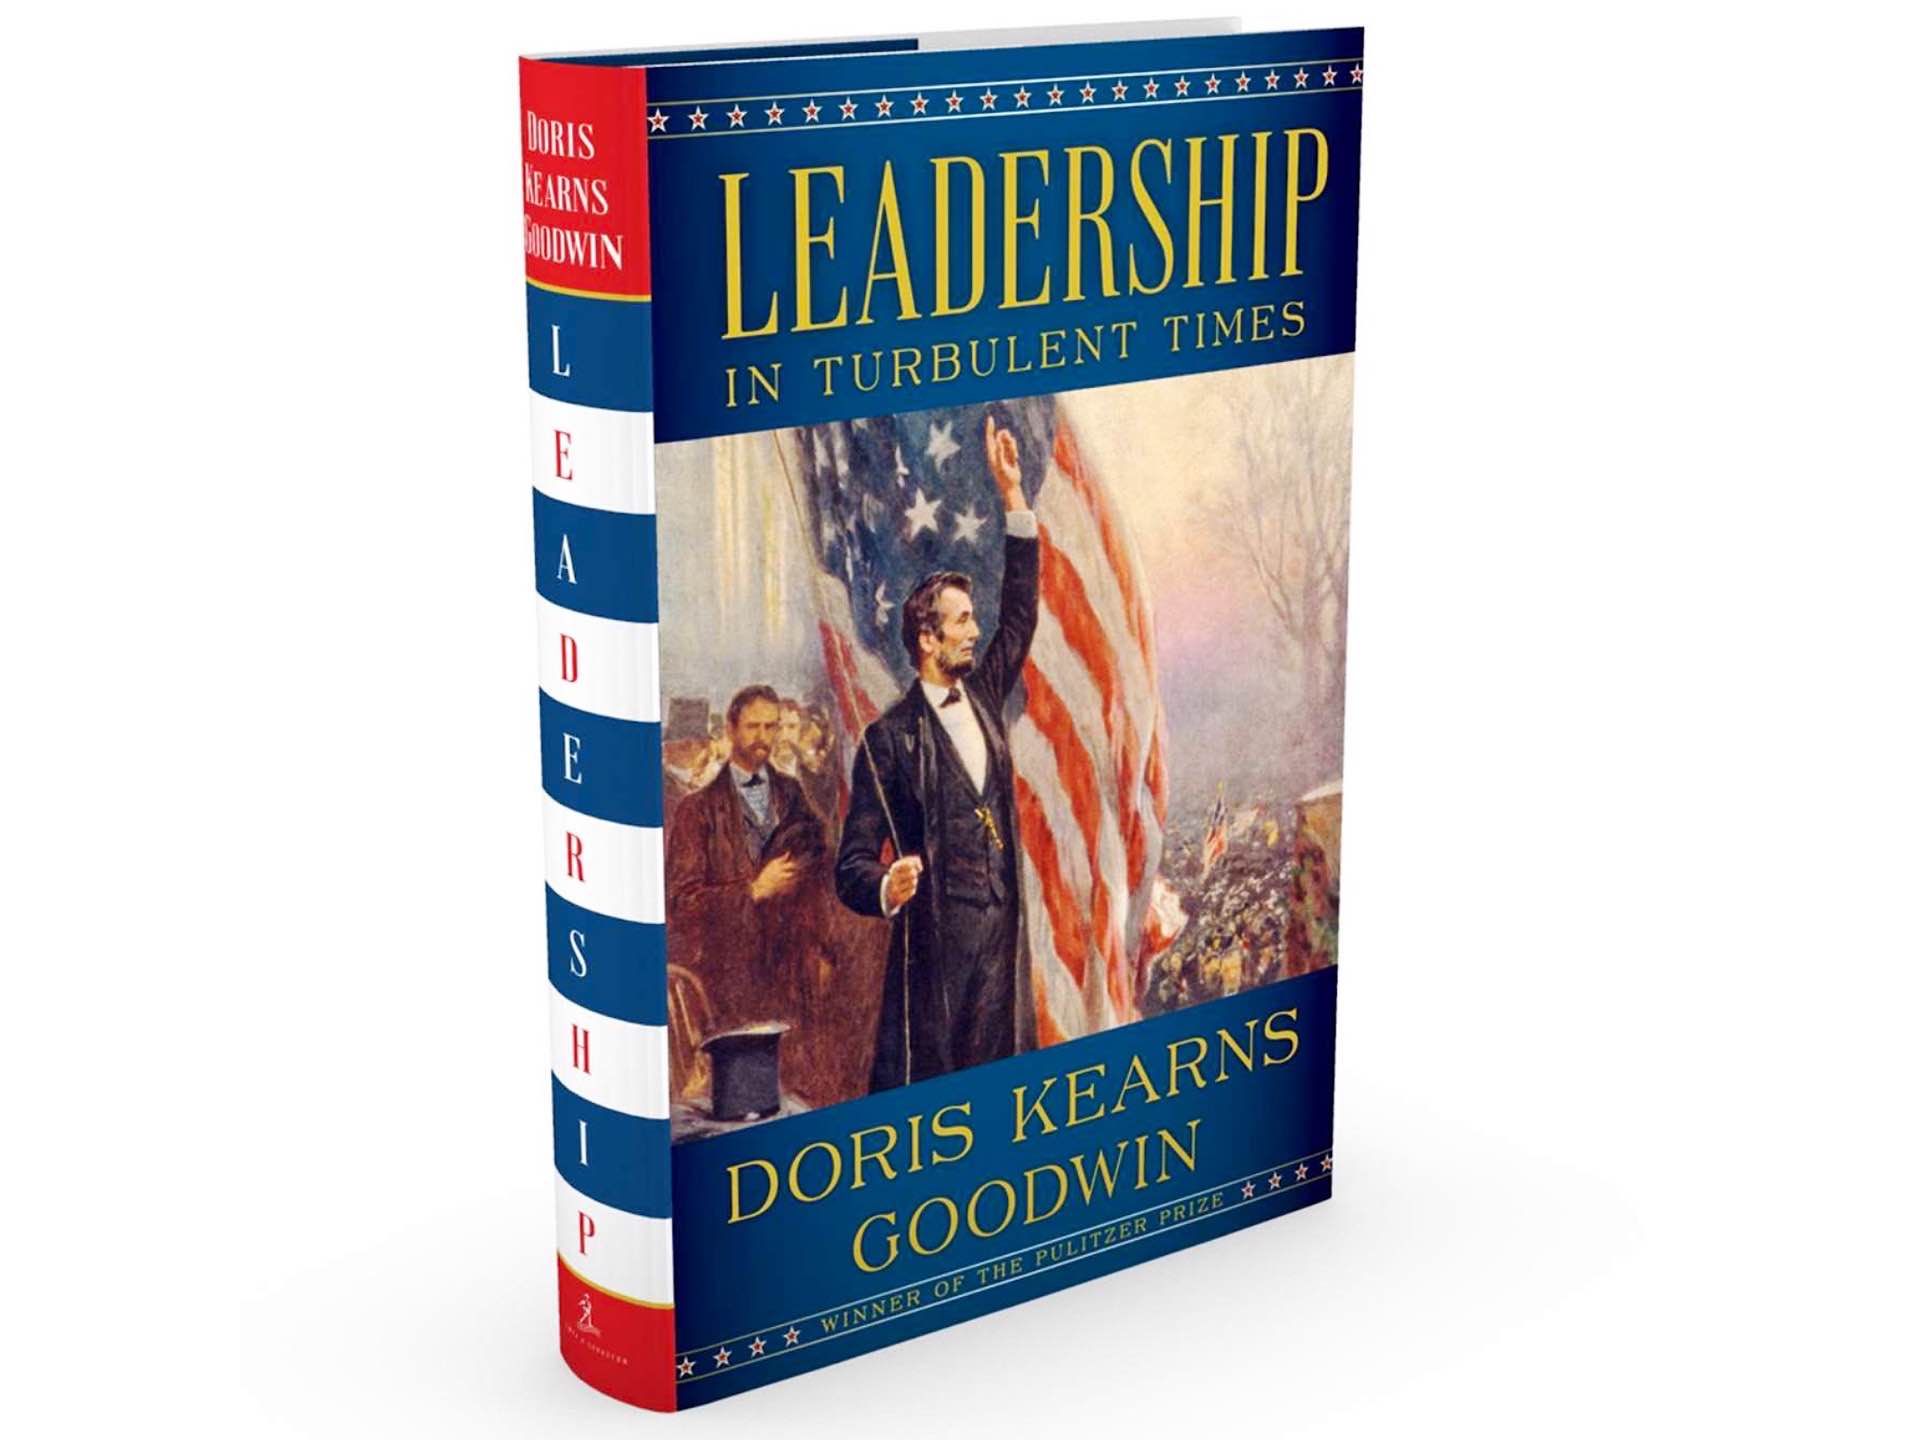 leadership-in-turbulent-times-by-doris-kearns-goodwin